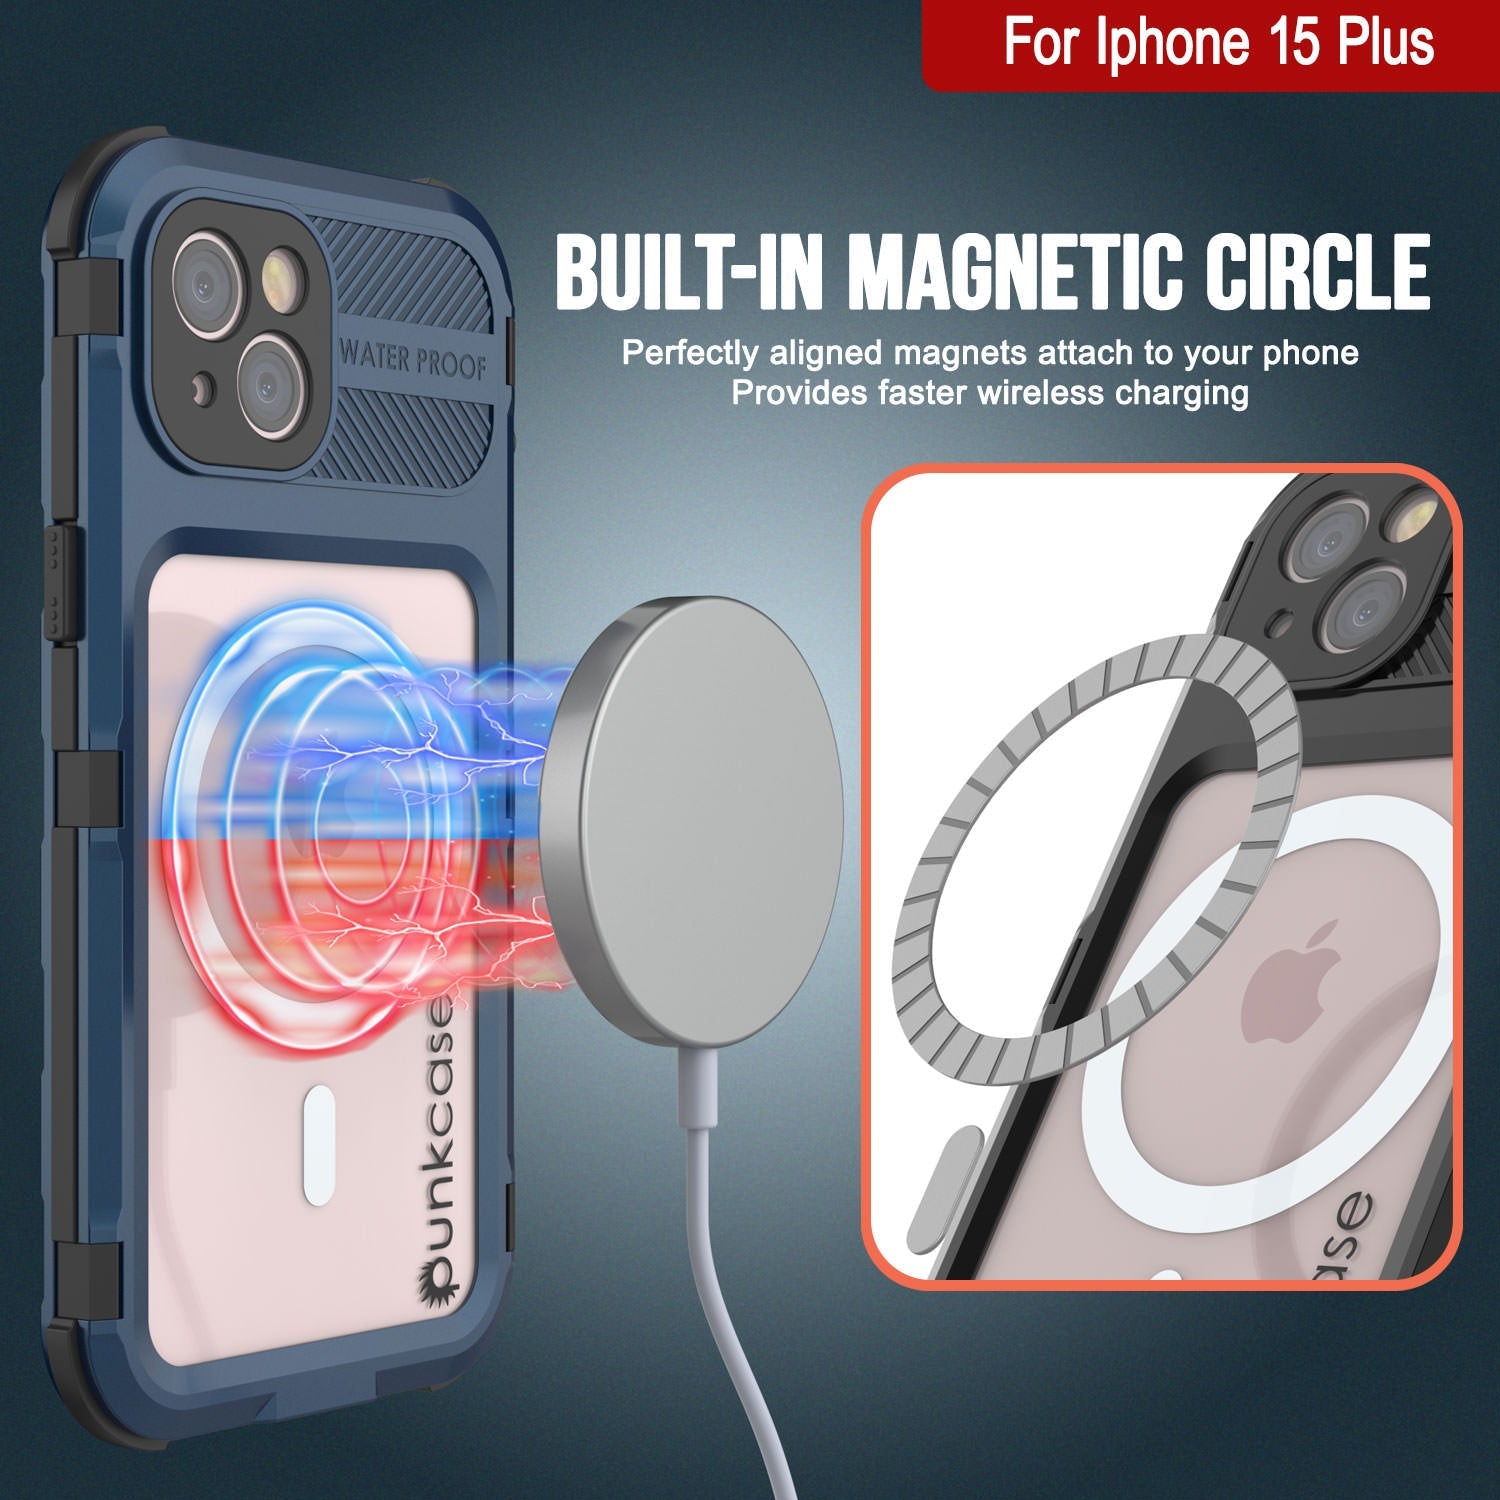 iPhone 15 Plus Metal Extreme 2.0 Series Aluminum Waterproof Case IP68 W/Buillt in Screen Protector [Blue]